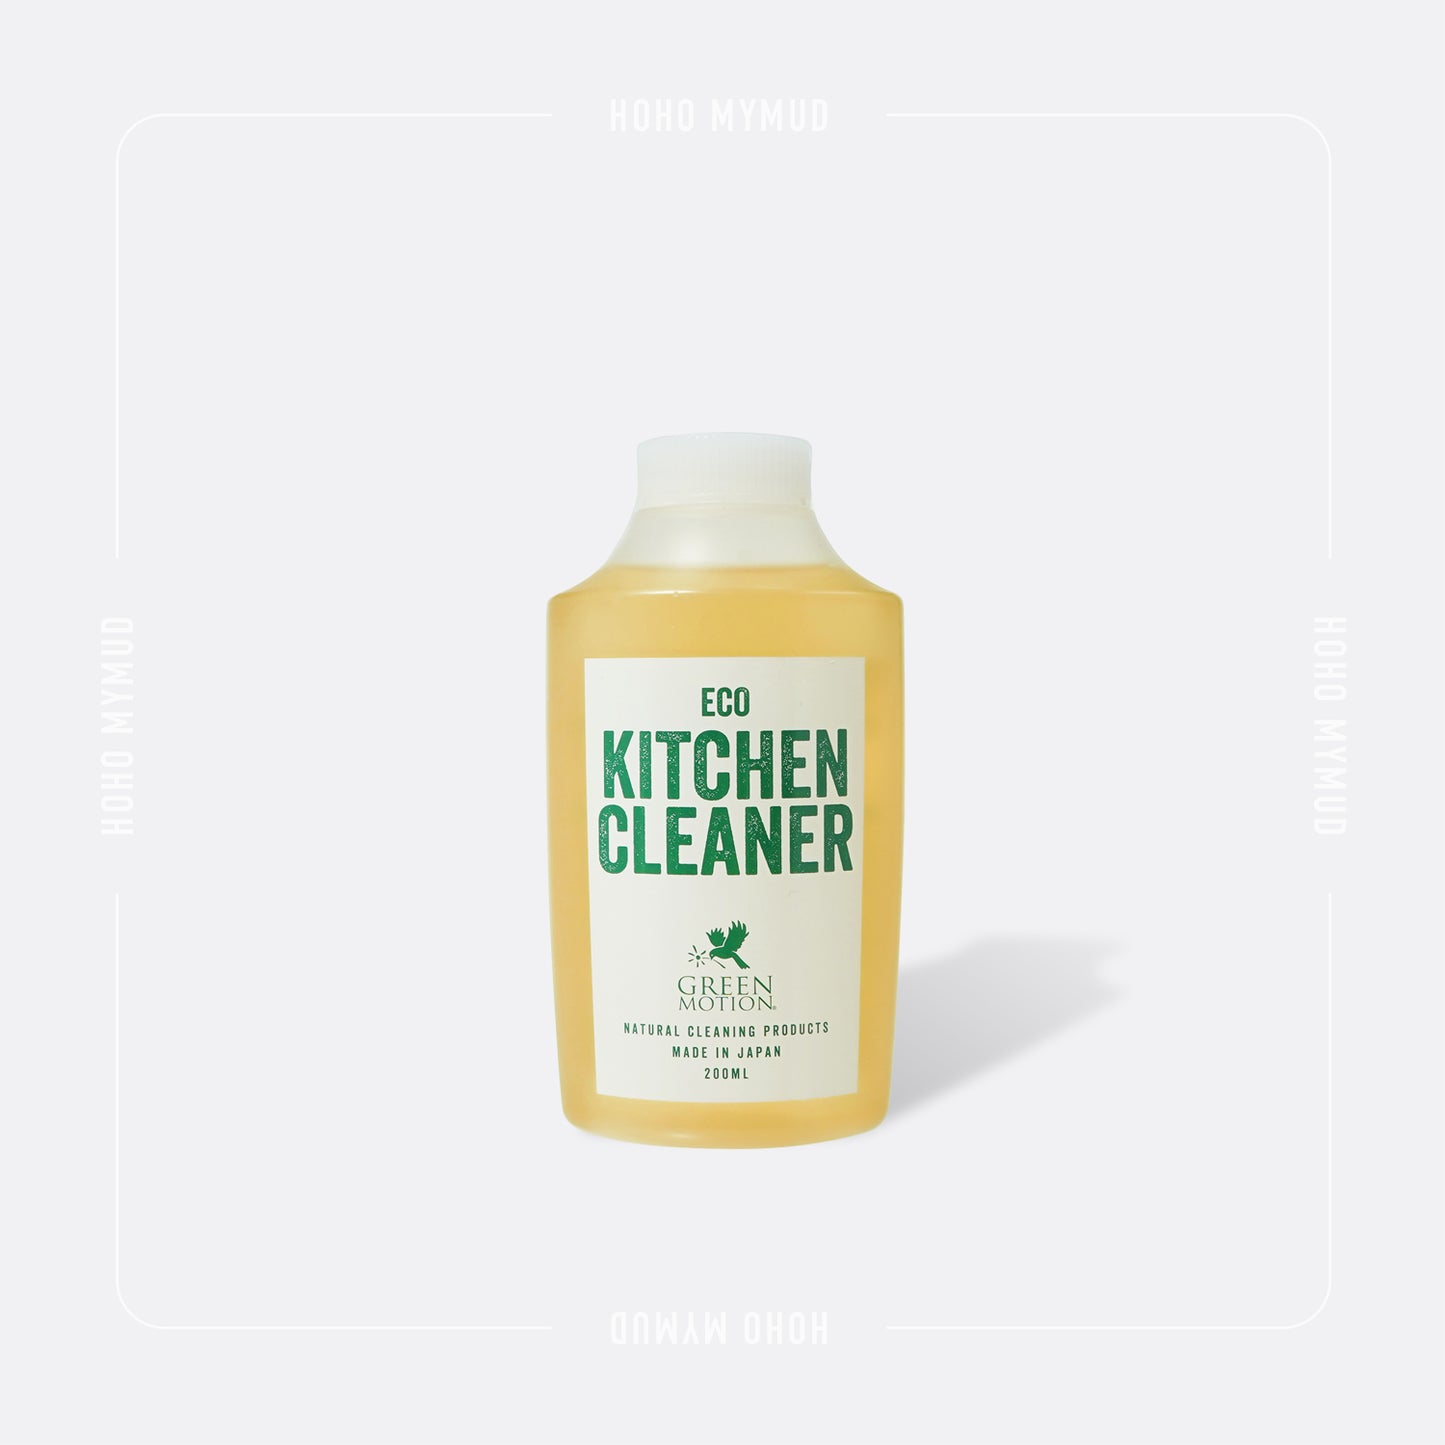 Green motion Eco Kitchen cleaner 天然廚房清潔劑濃縮補充裝